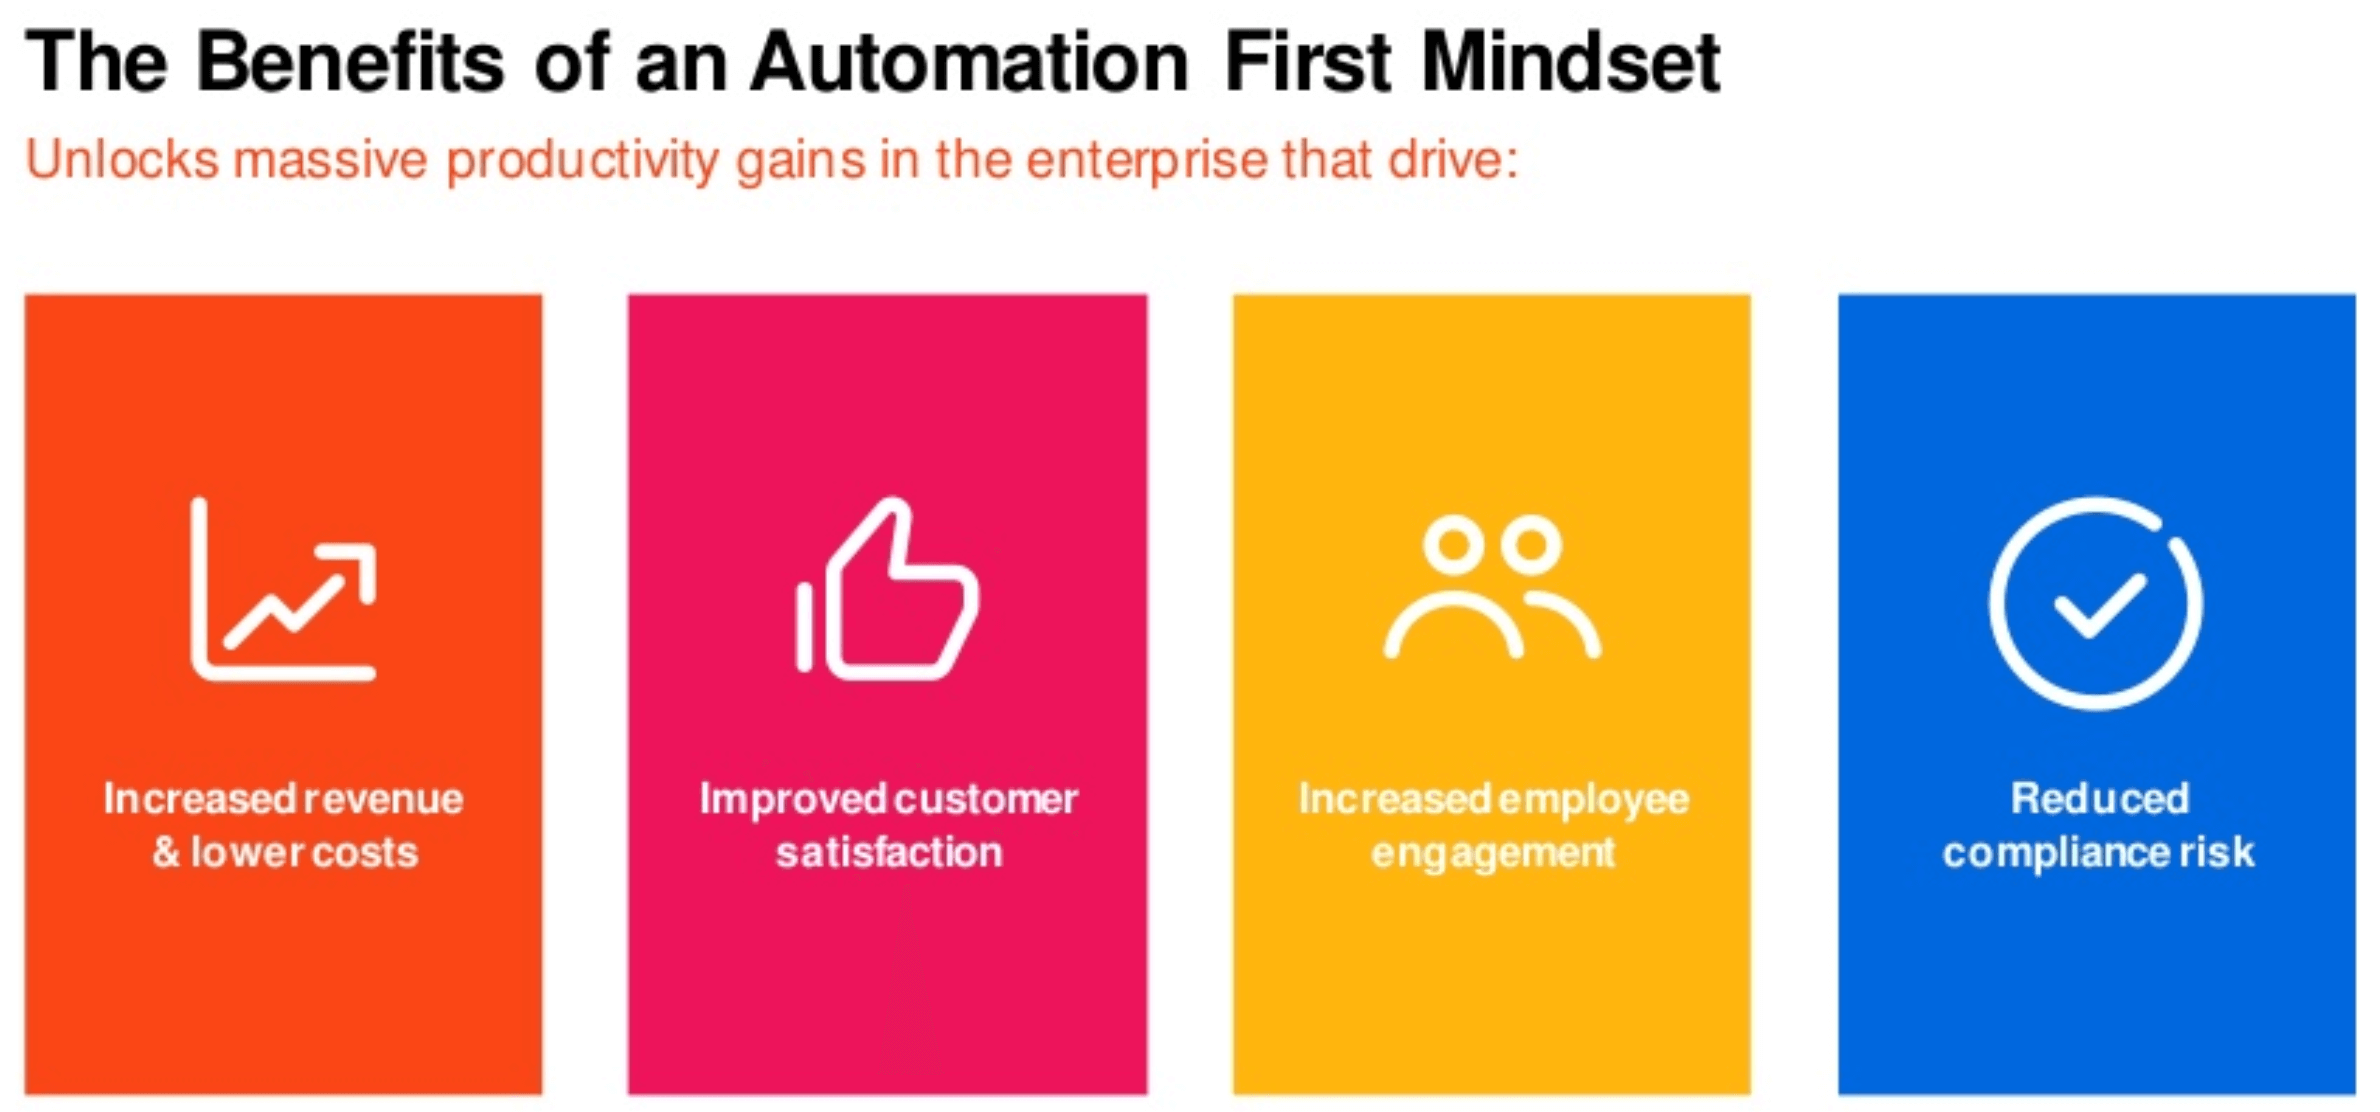 automation first mindset benefits